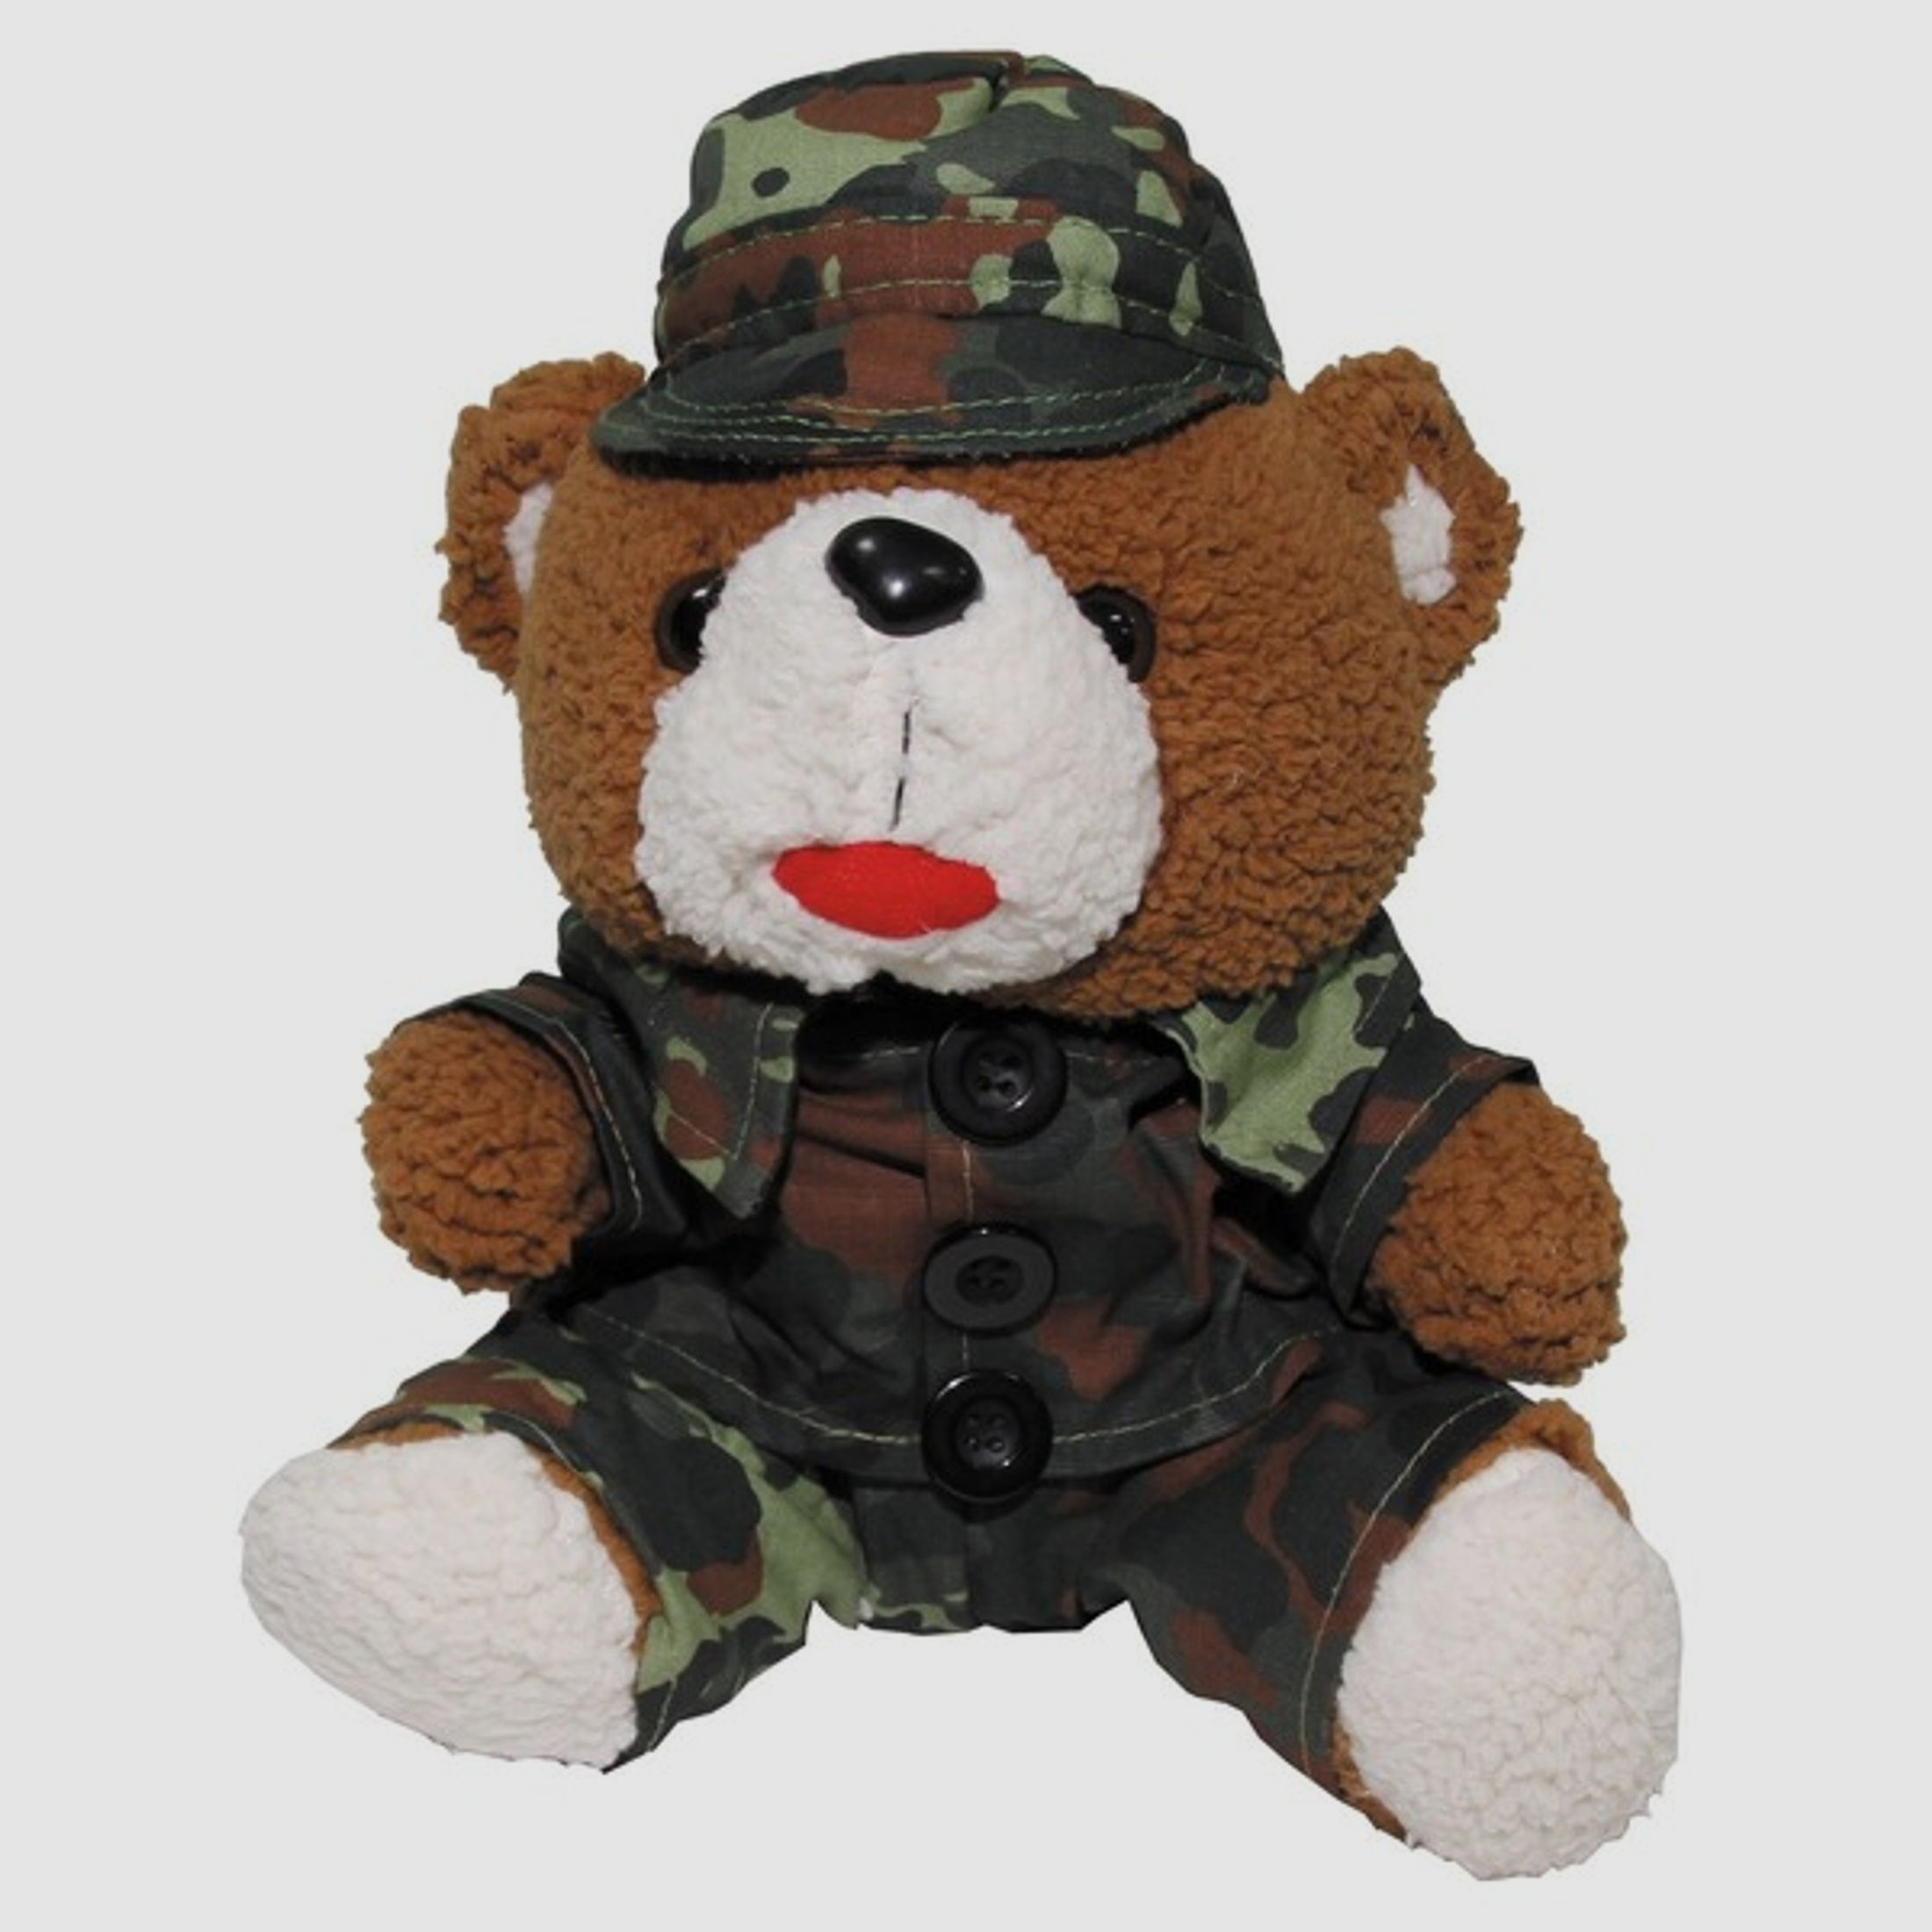 Teddybär mit Bundeswehr Anzug / Uniform + Mütze in BW Flecktarn / Punkttarn - ca. 28 cm hoch